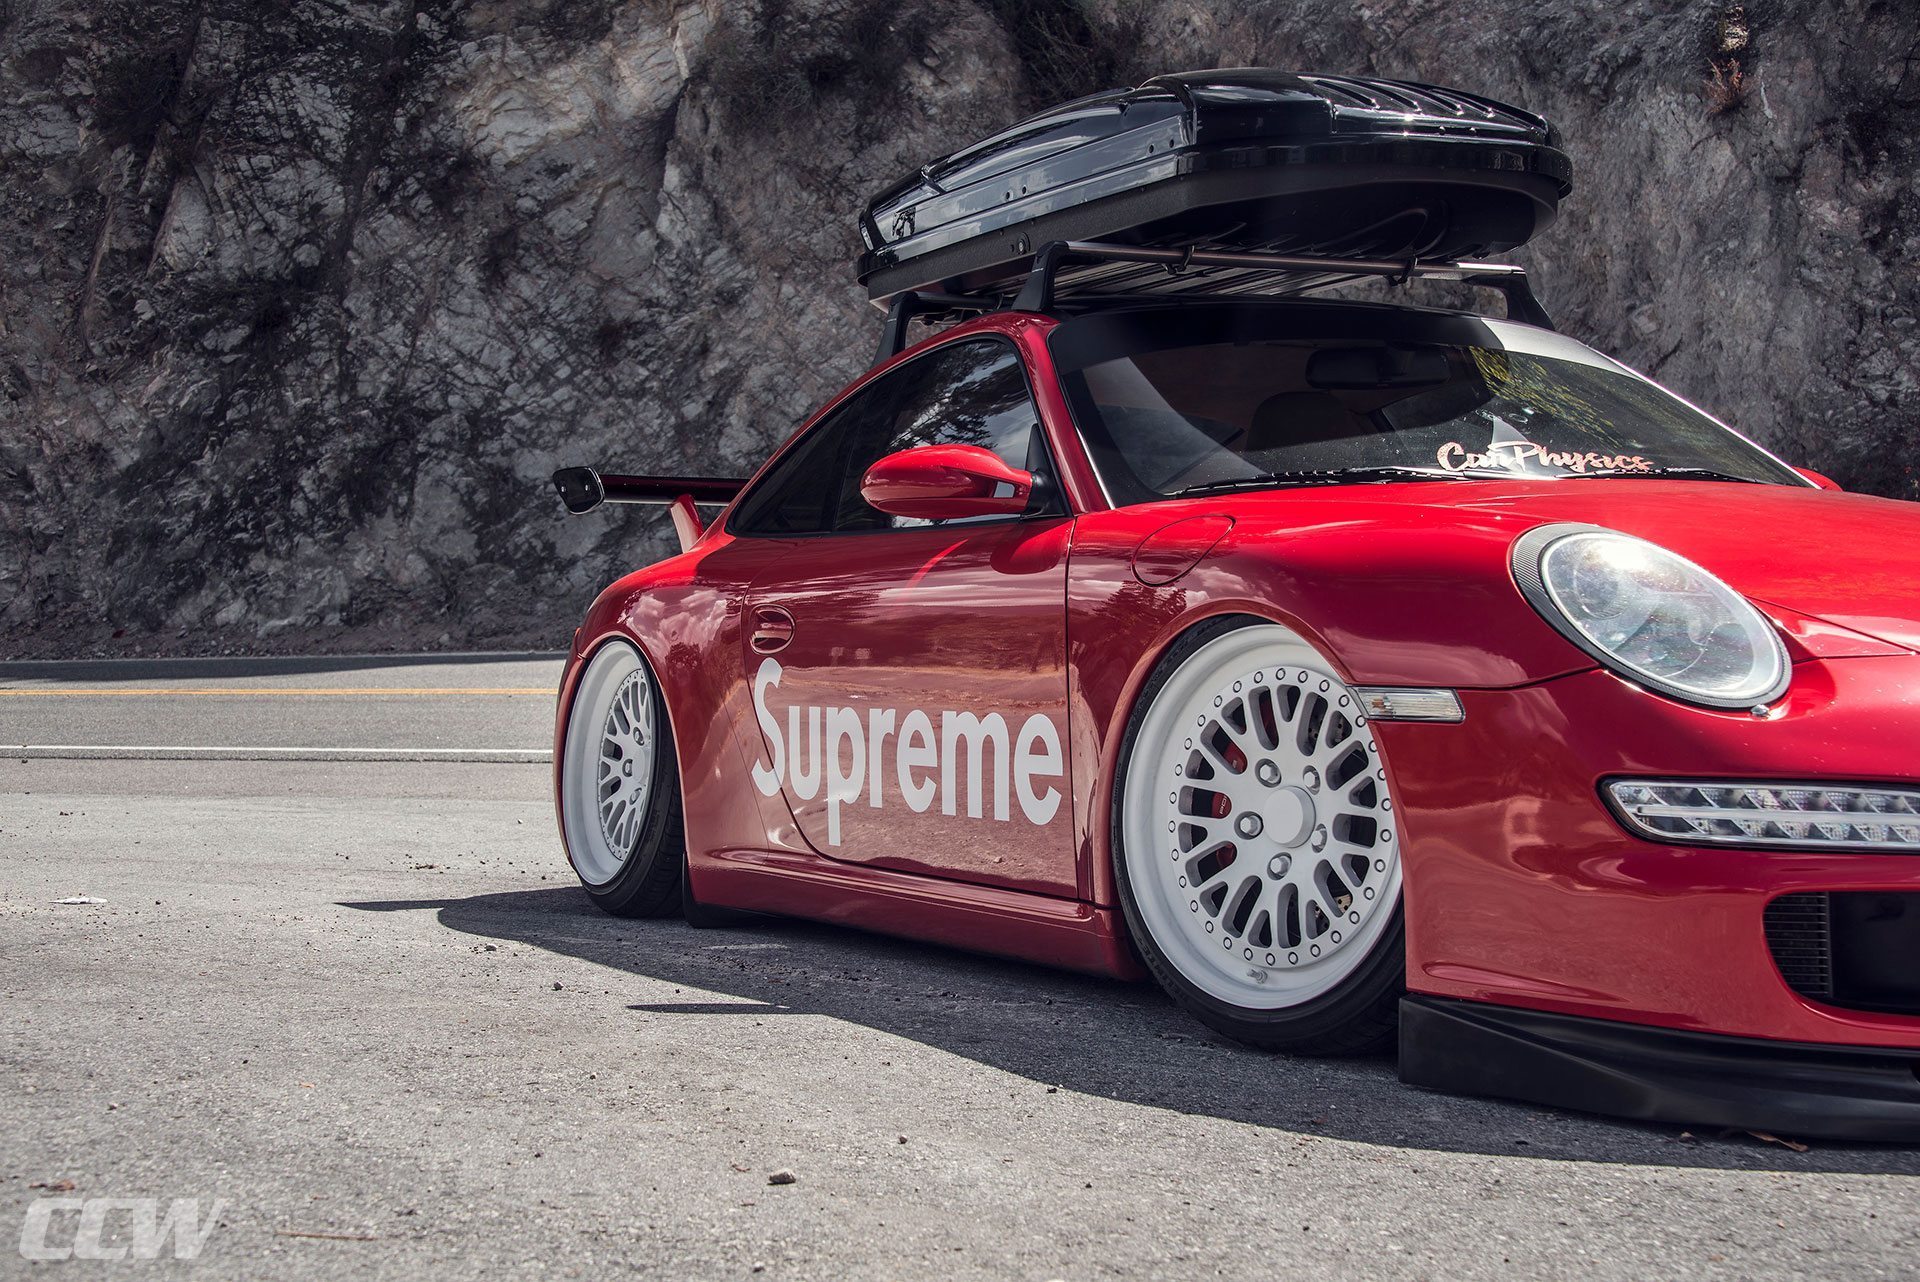 Supreme Porsche 911 - CCW Classic Wheels